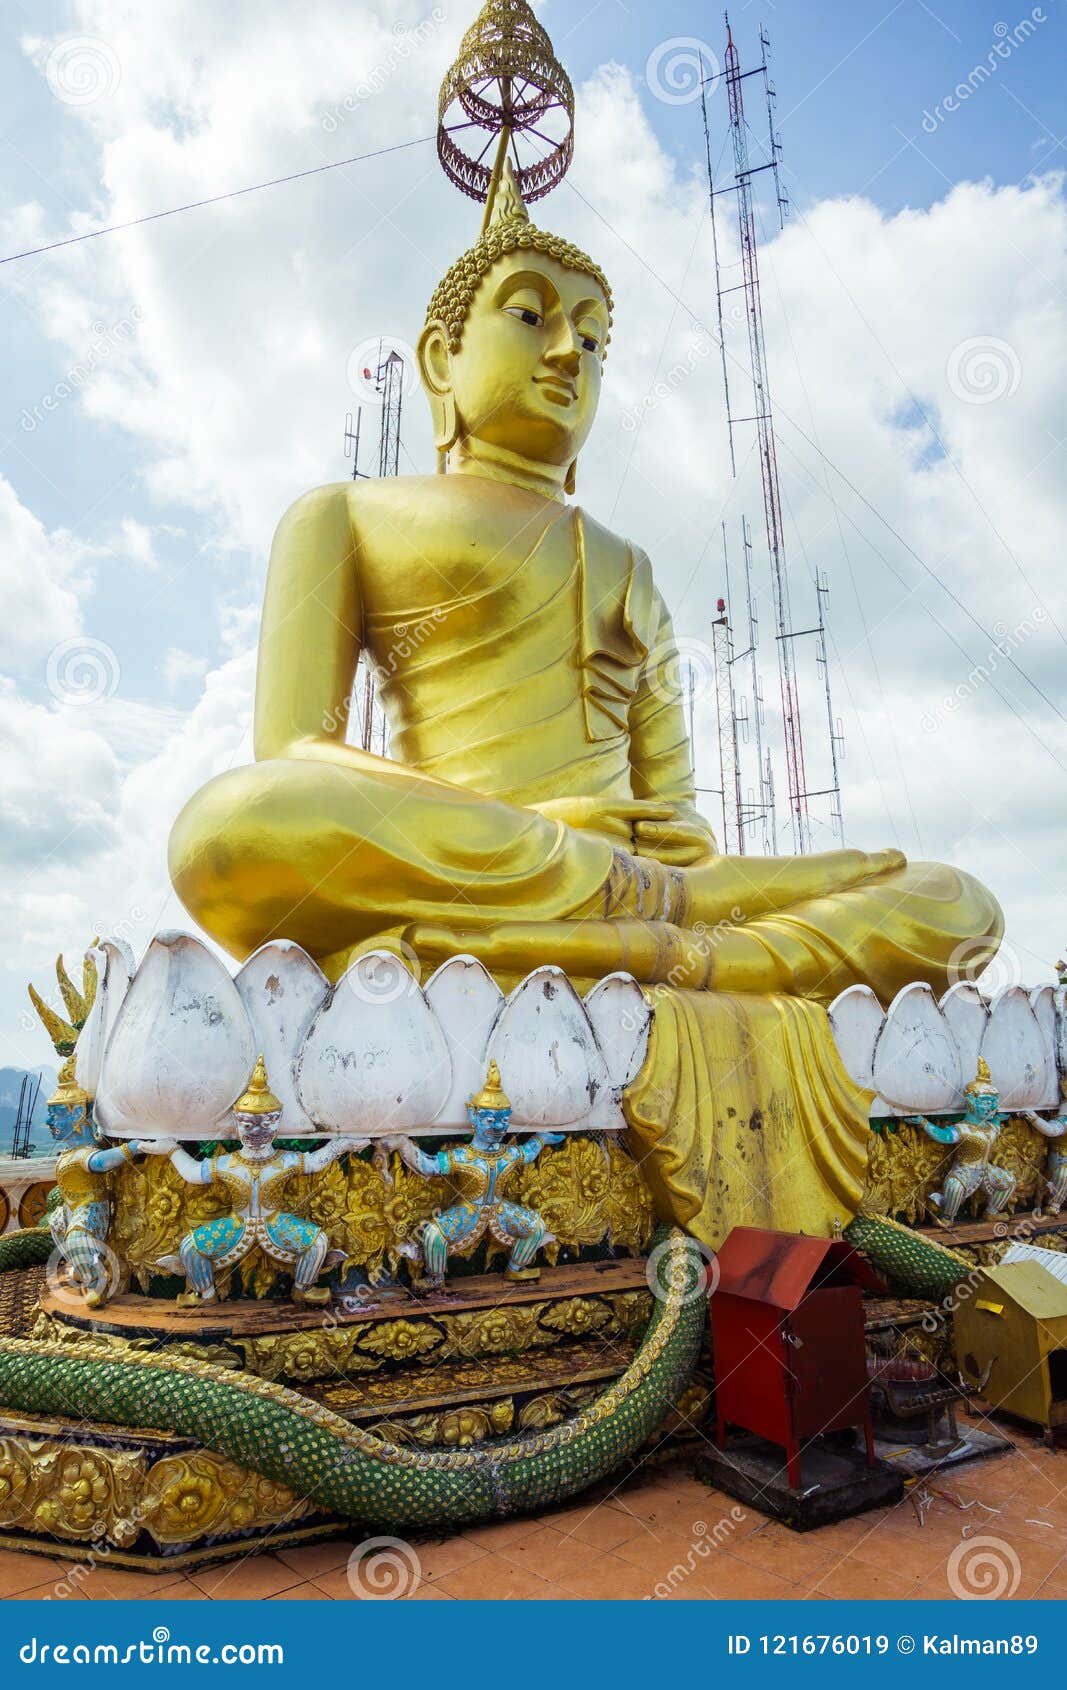 Golden Budda Monument in Krabi. Tiger Temple Stock Image - Image of ...